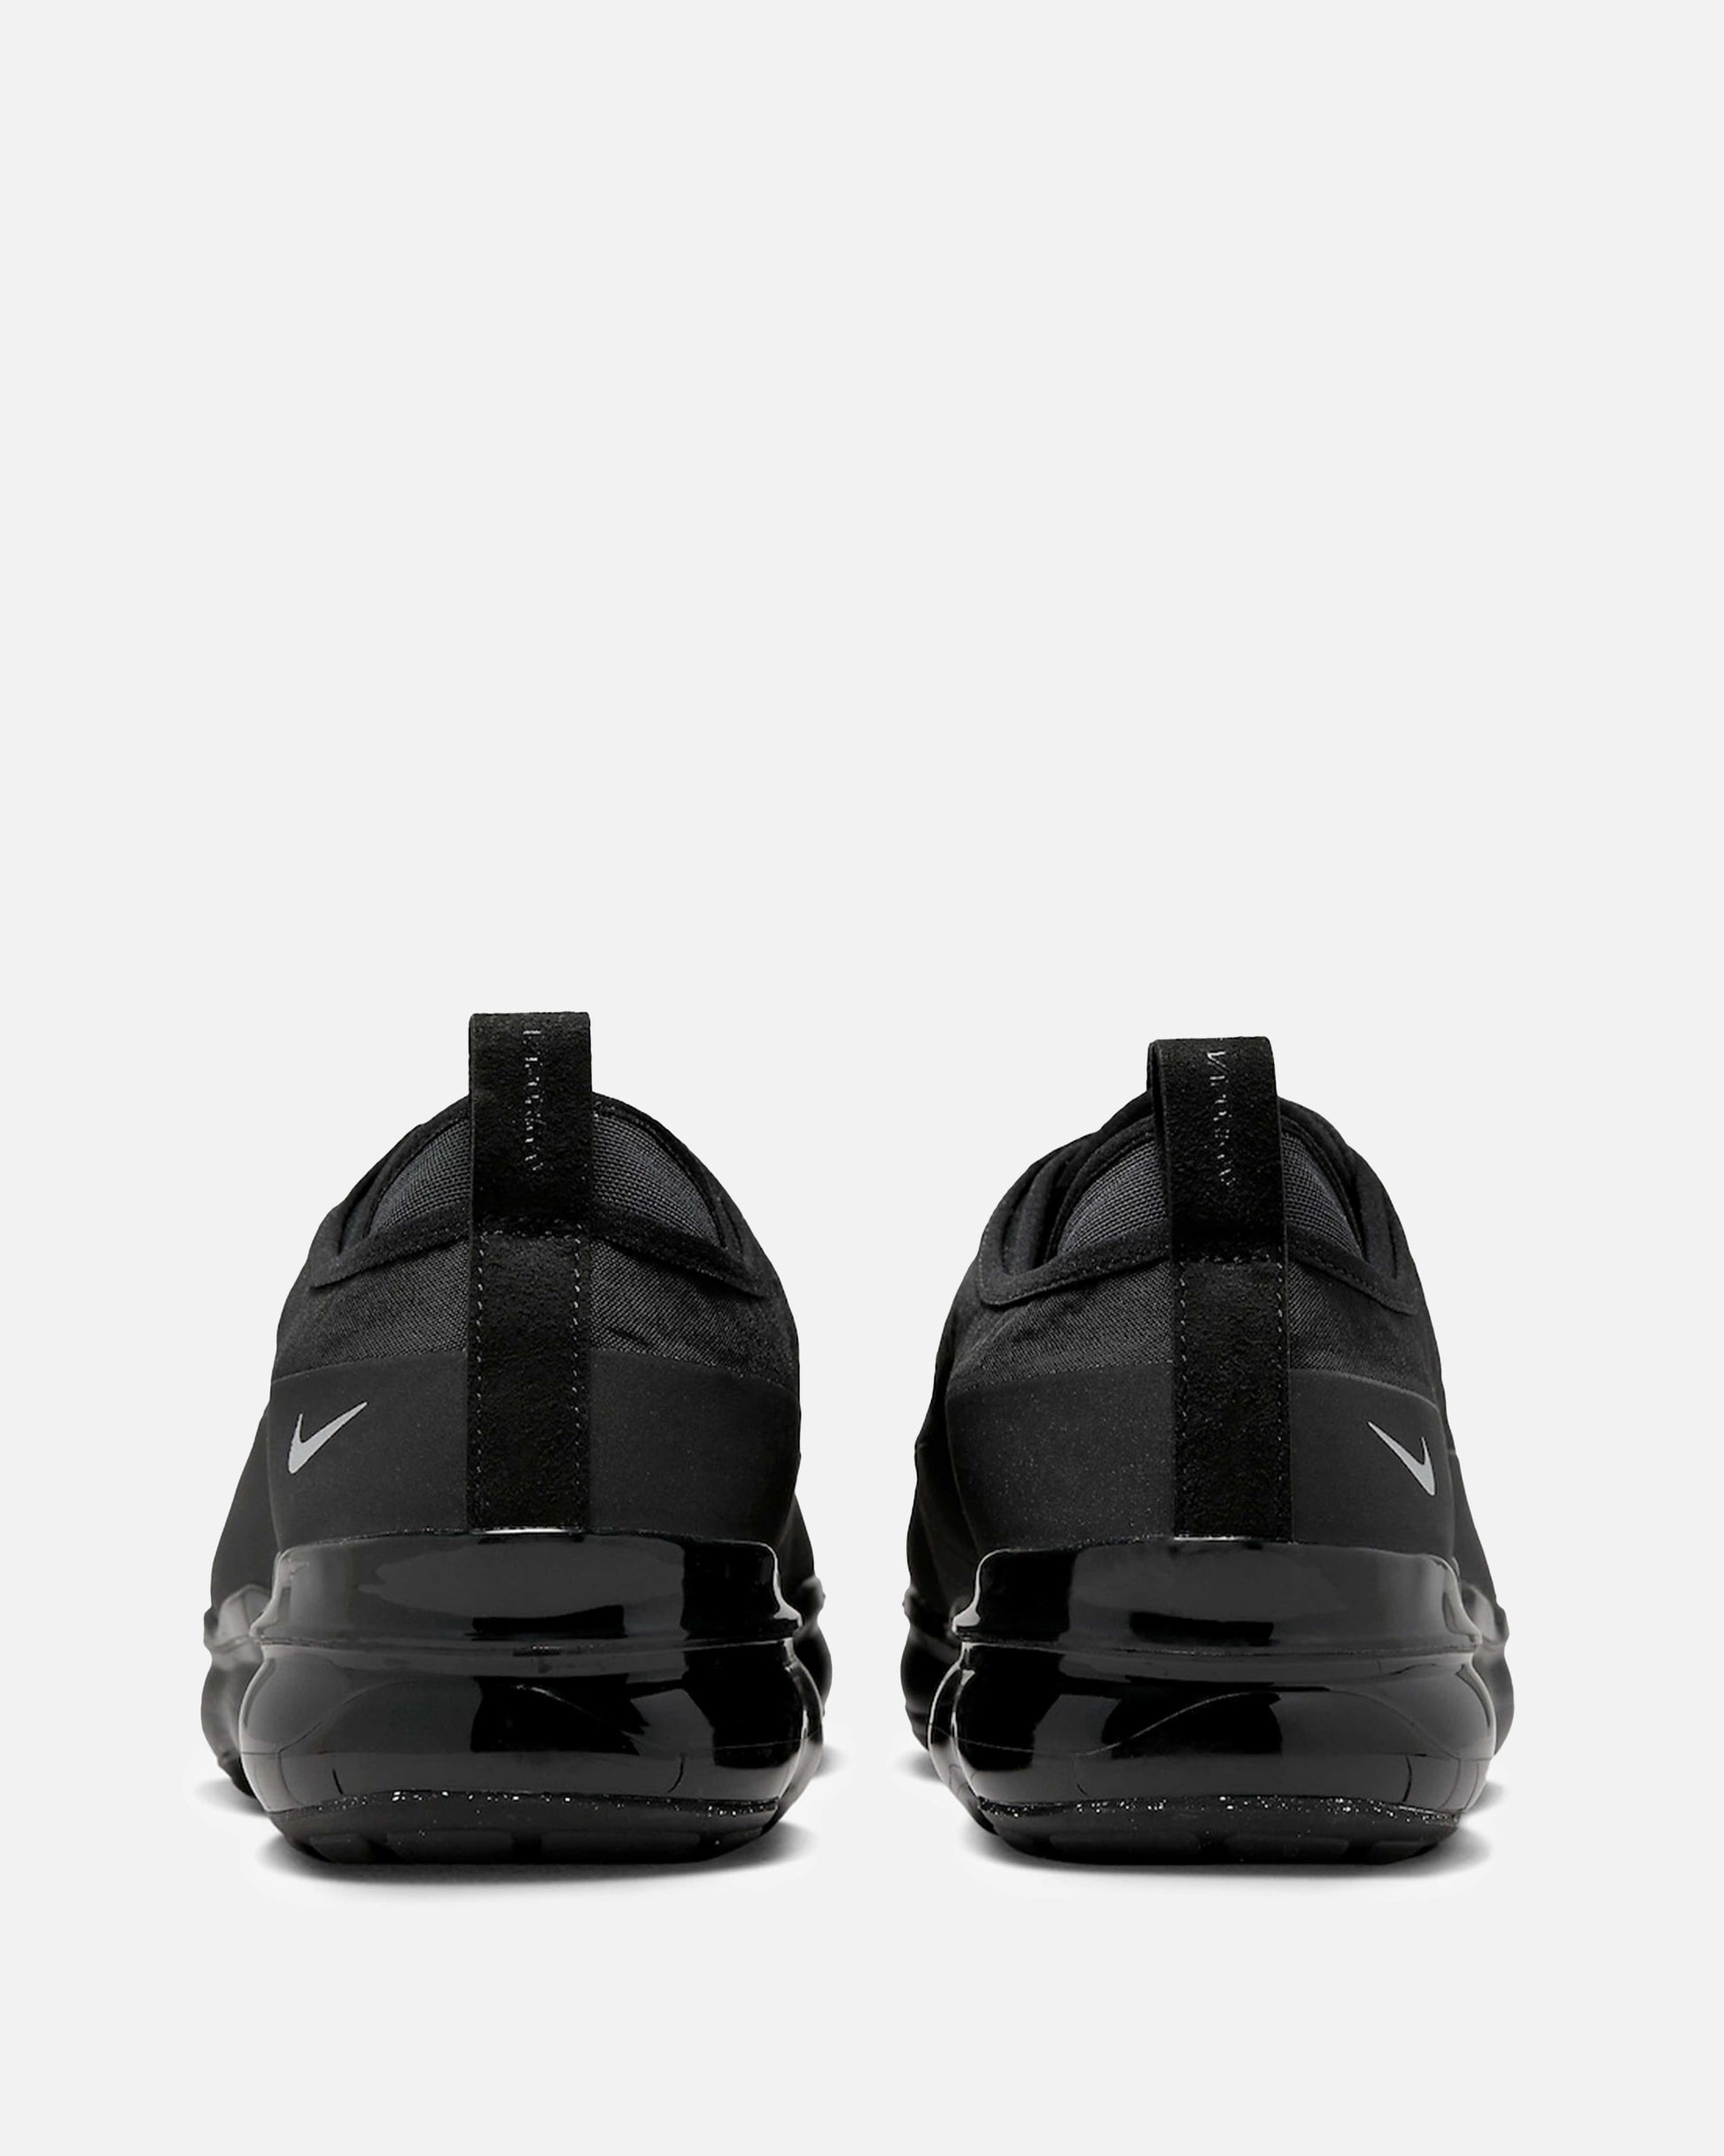 Nike Men's Shoes Air Vapormax Moc Roam 'Black'